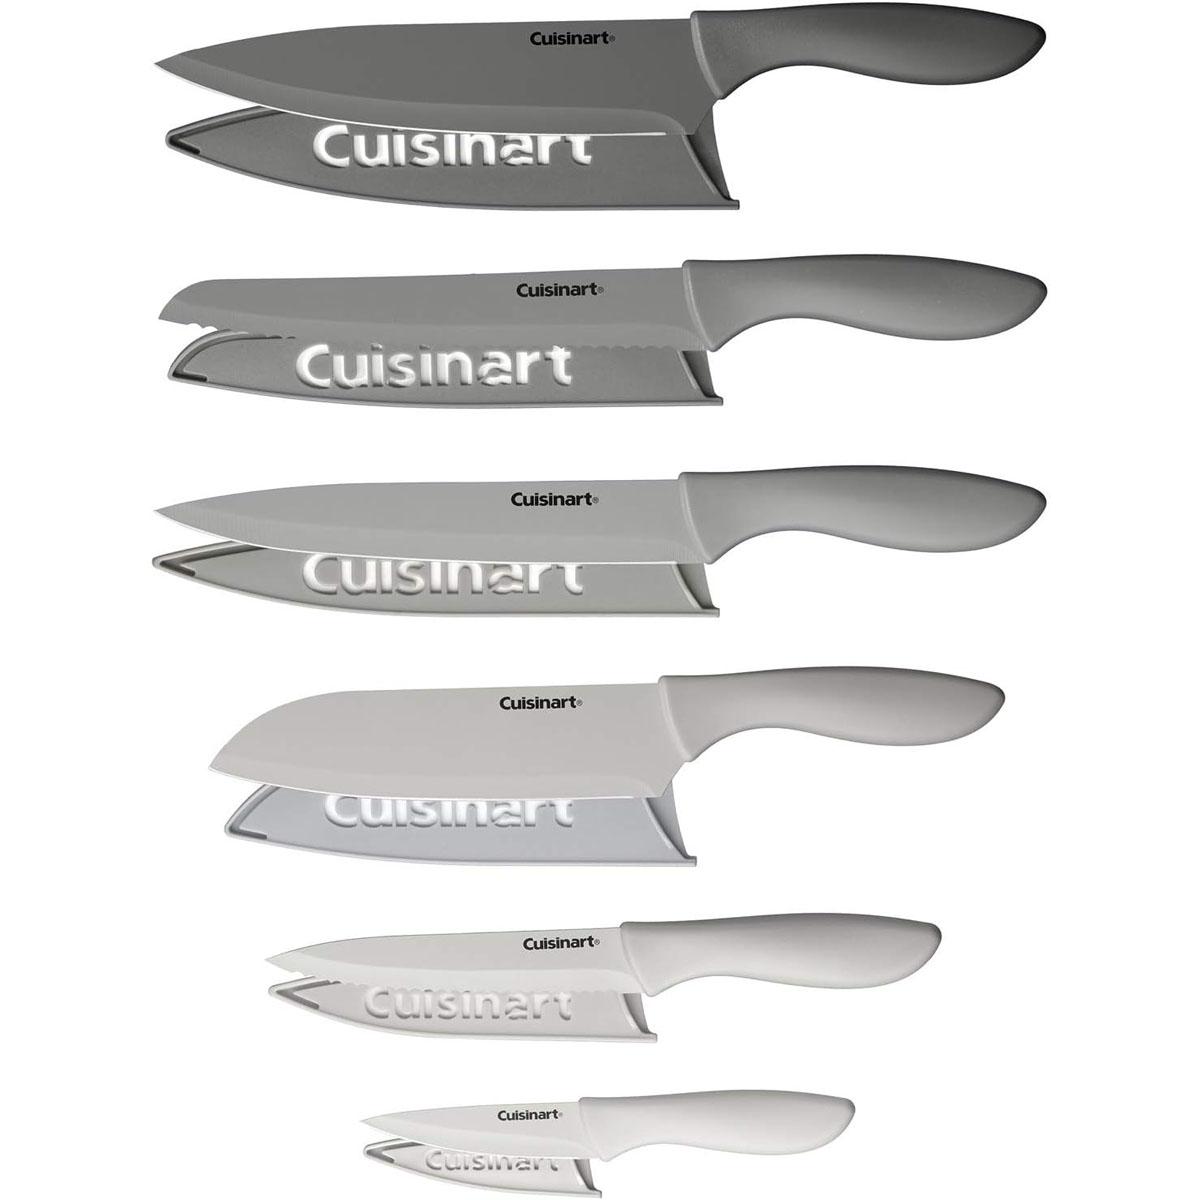 Cuisinart Advantage 12-Piece Gray Knife Set for $14.95 Shipped